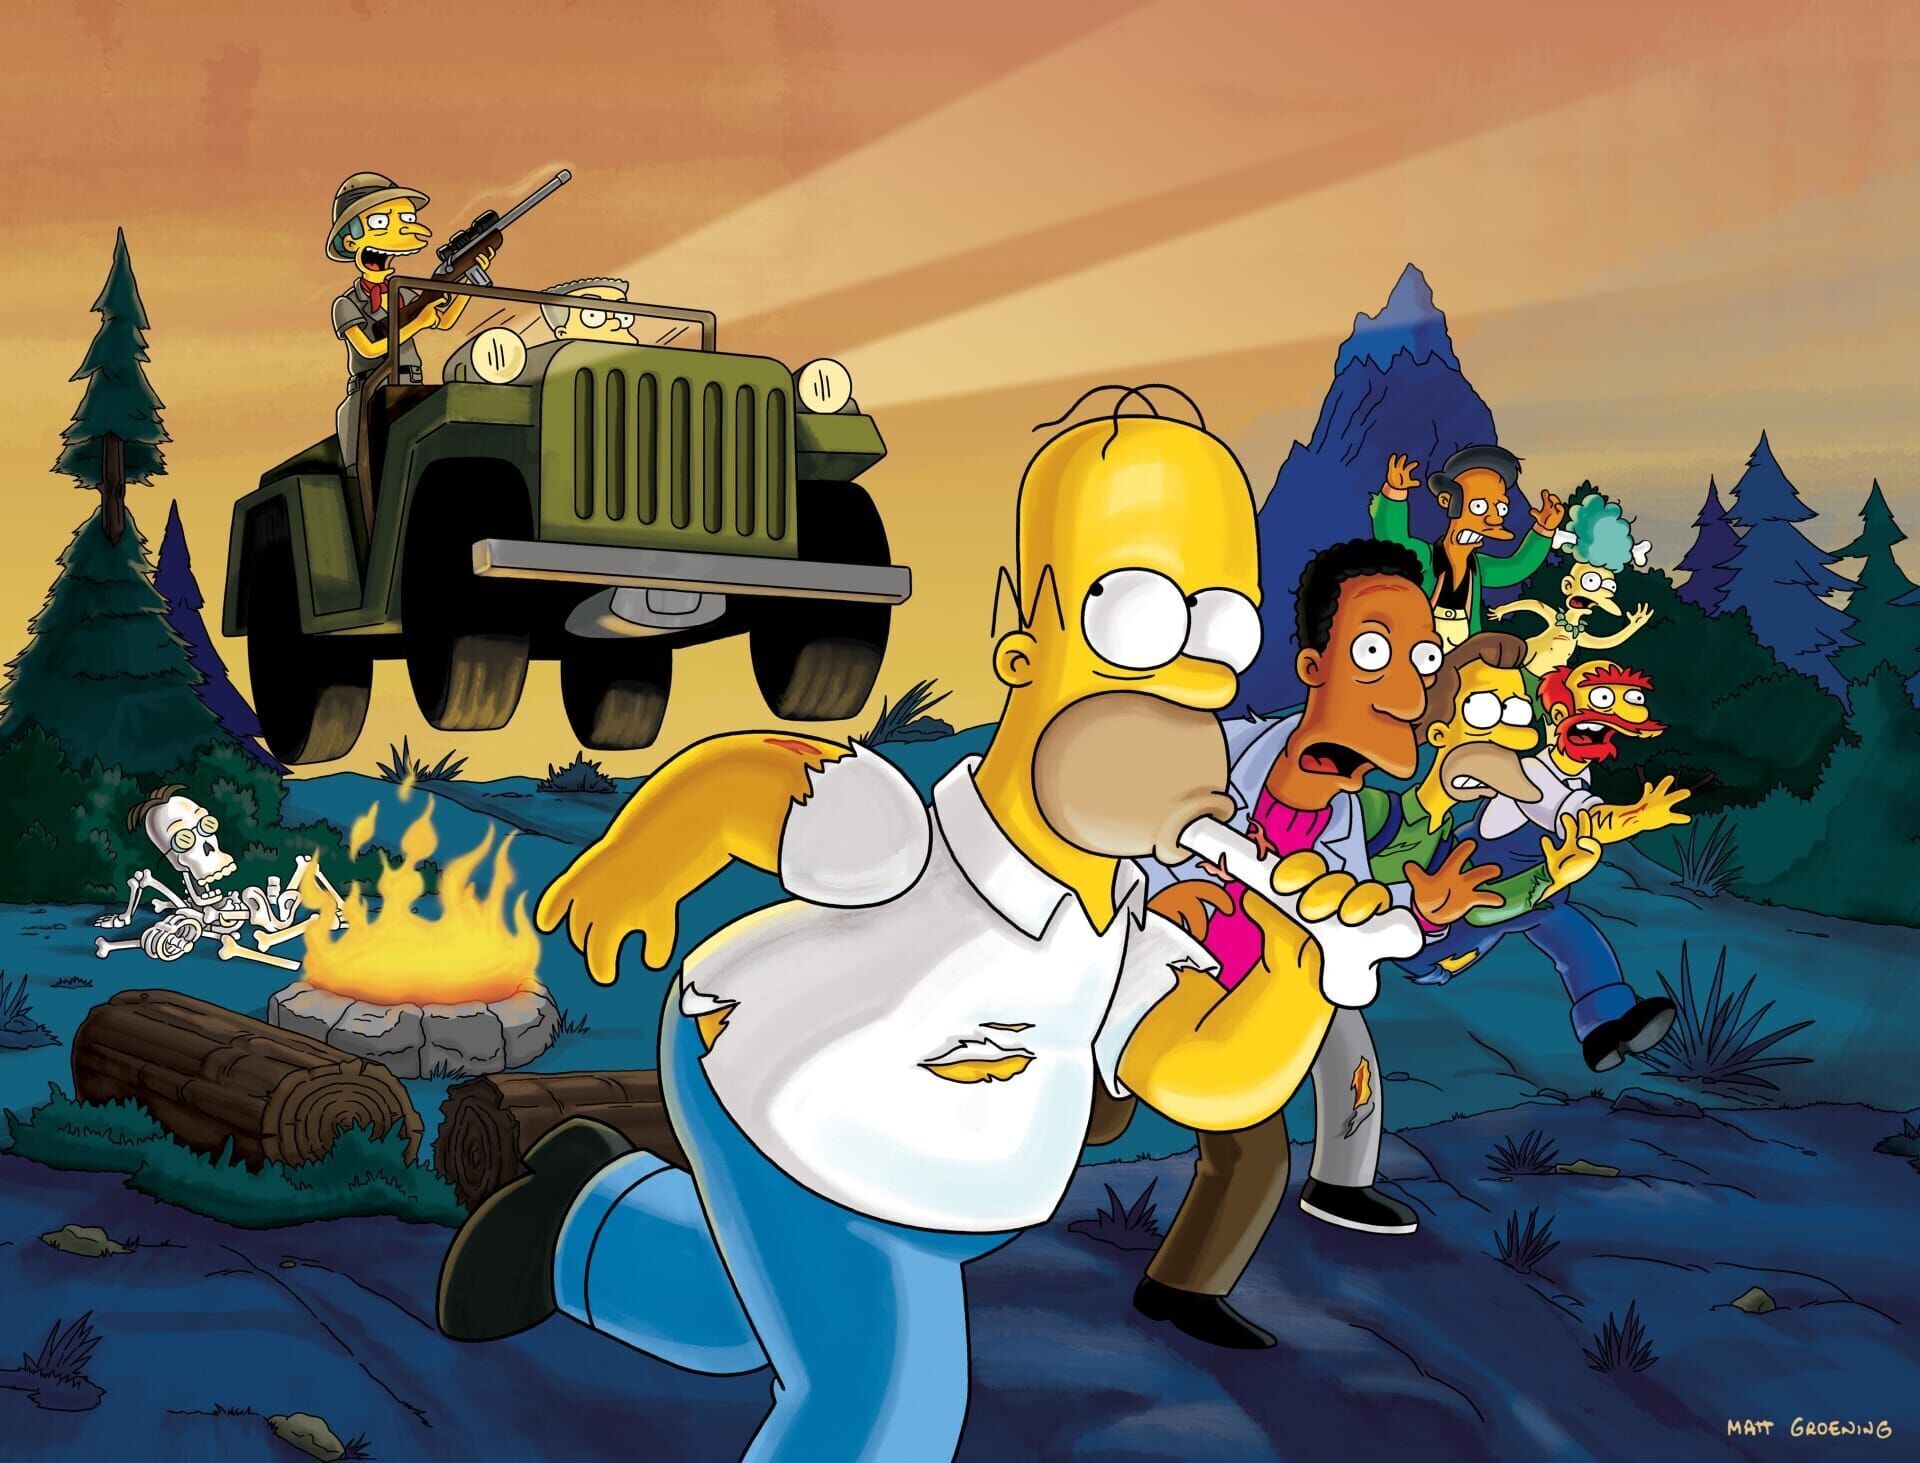 The Simpsons - Seizoen 16